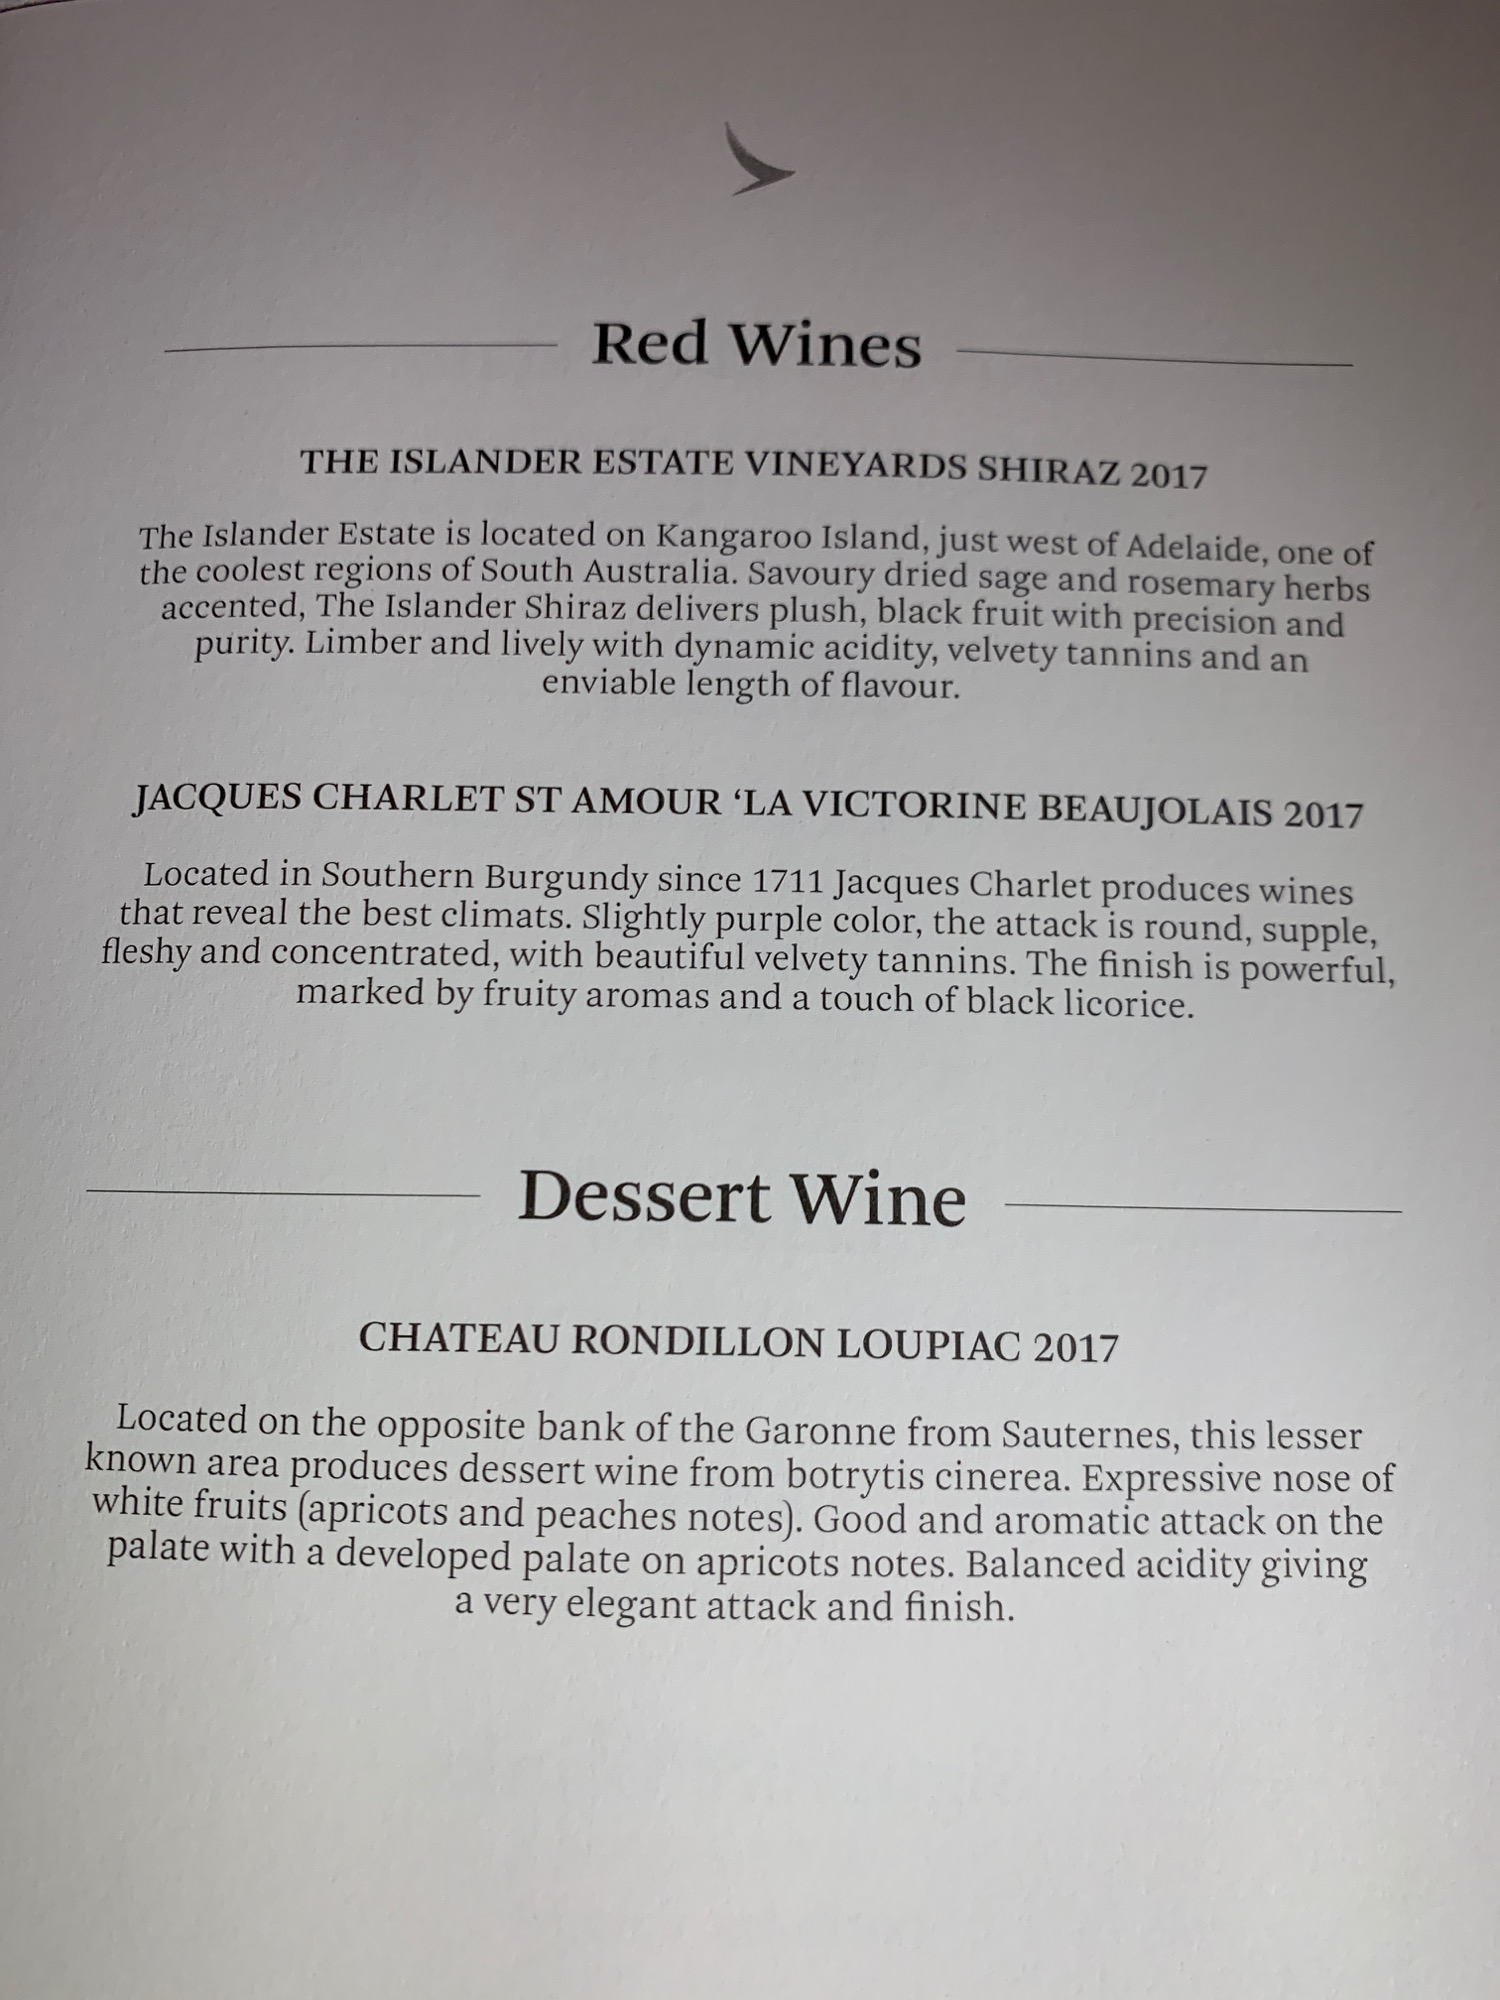 a menu of wine and dessert